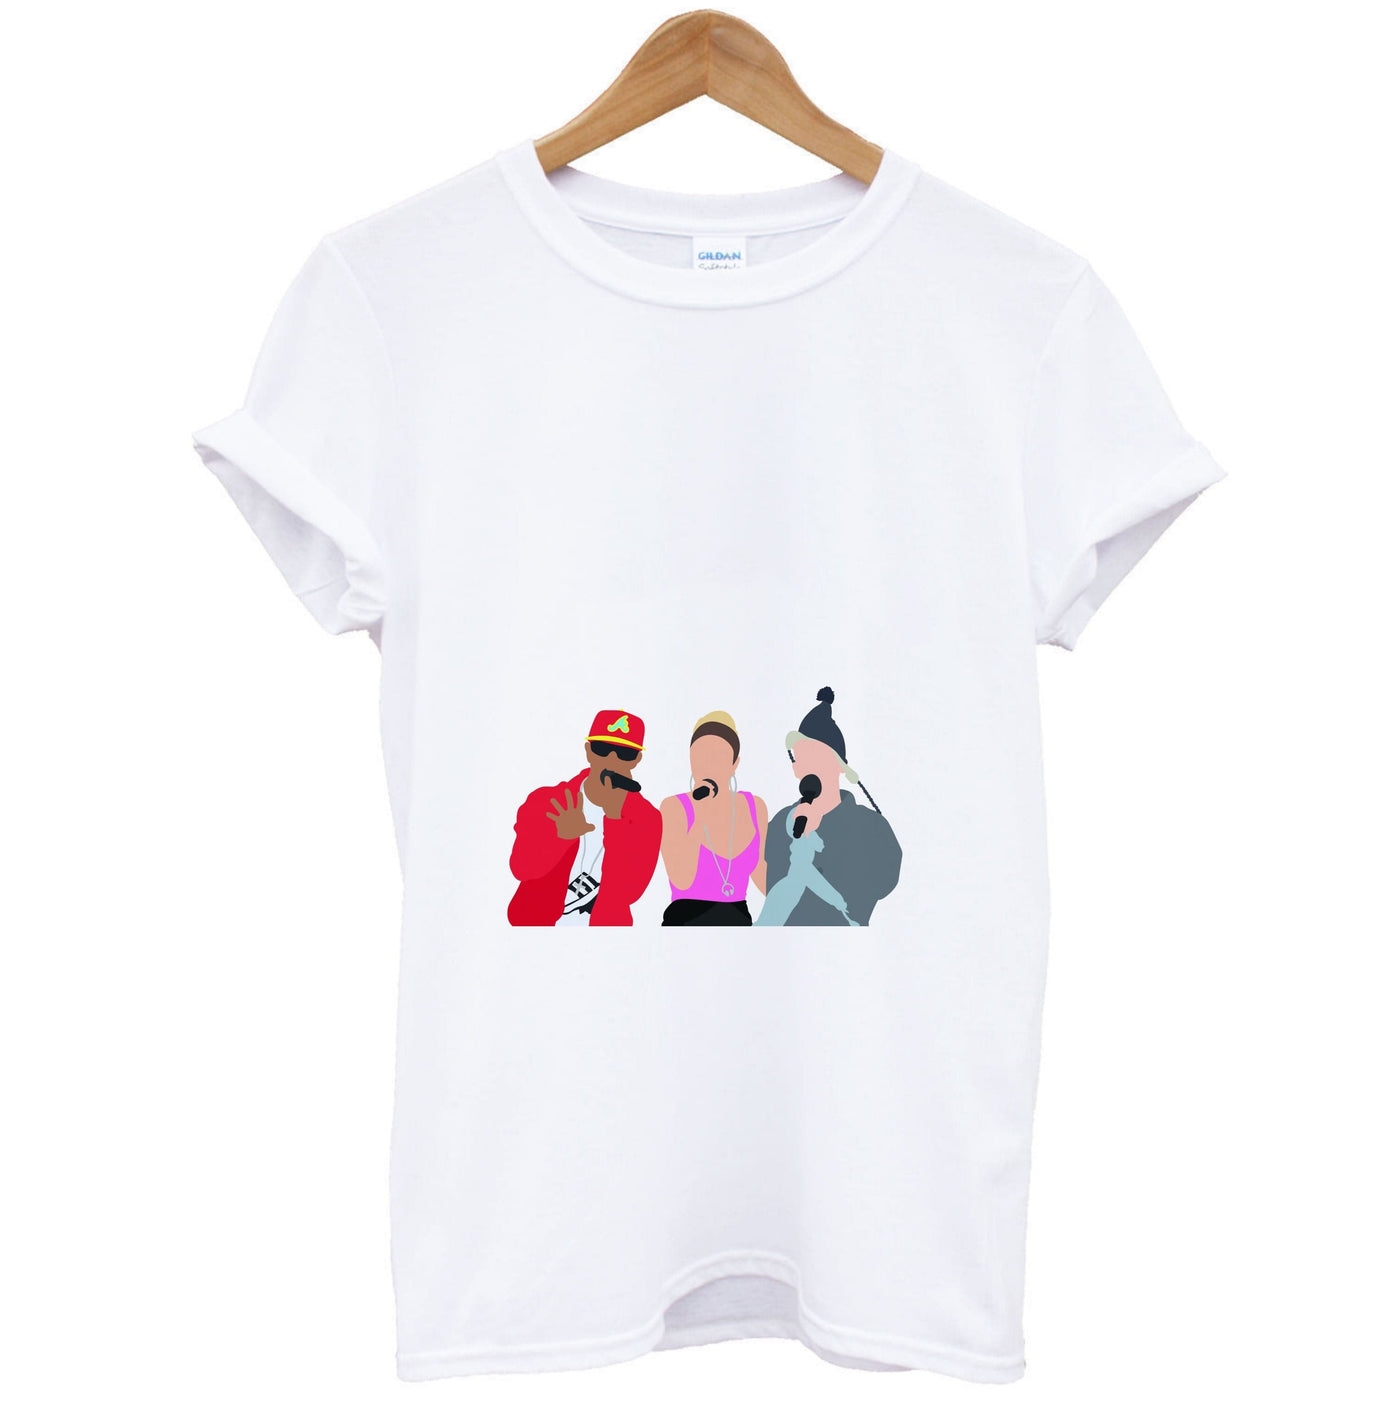 The Three - N-Dubz T-Shirt